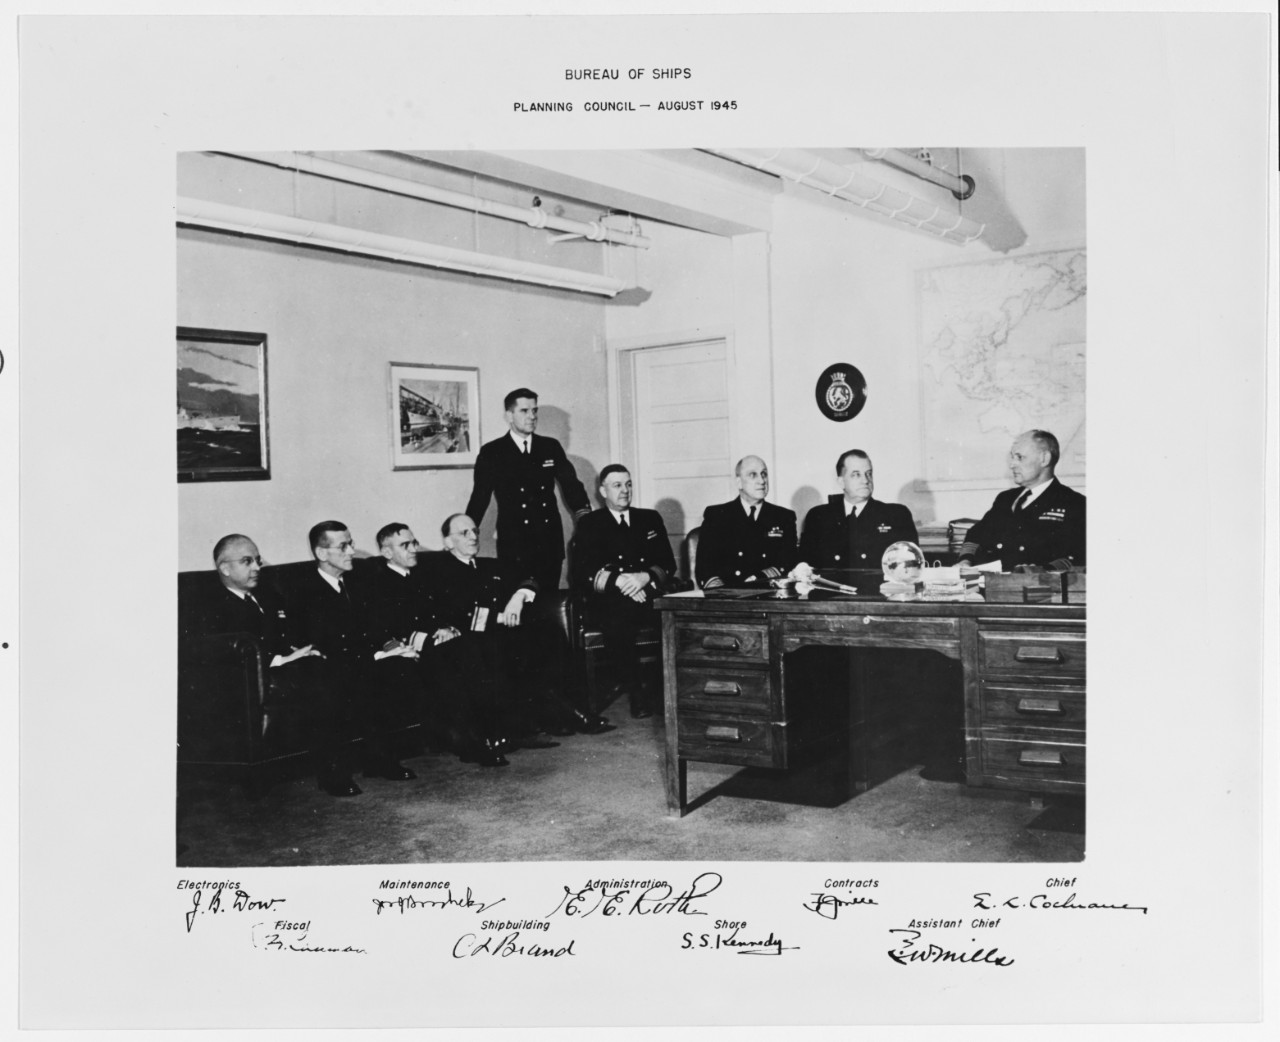 Bureau of Ships planning council